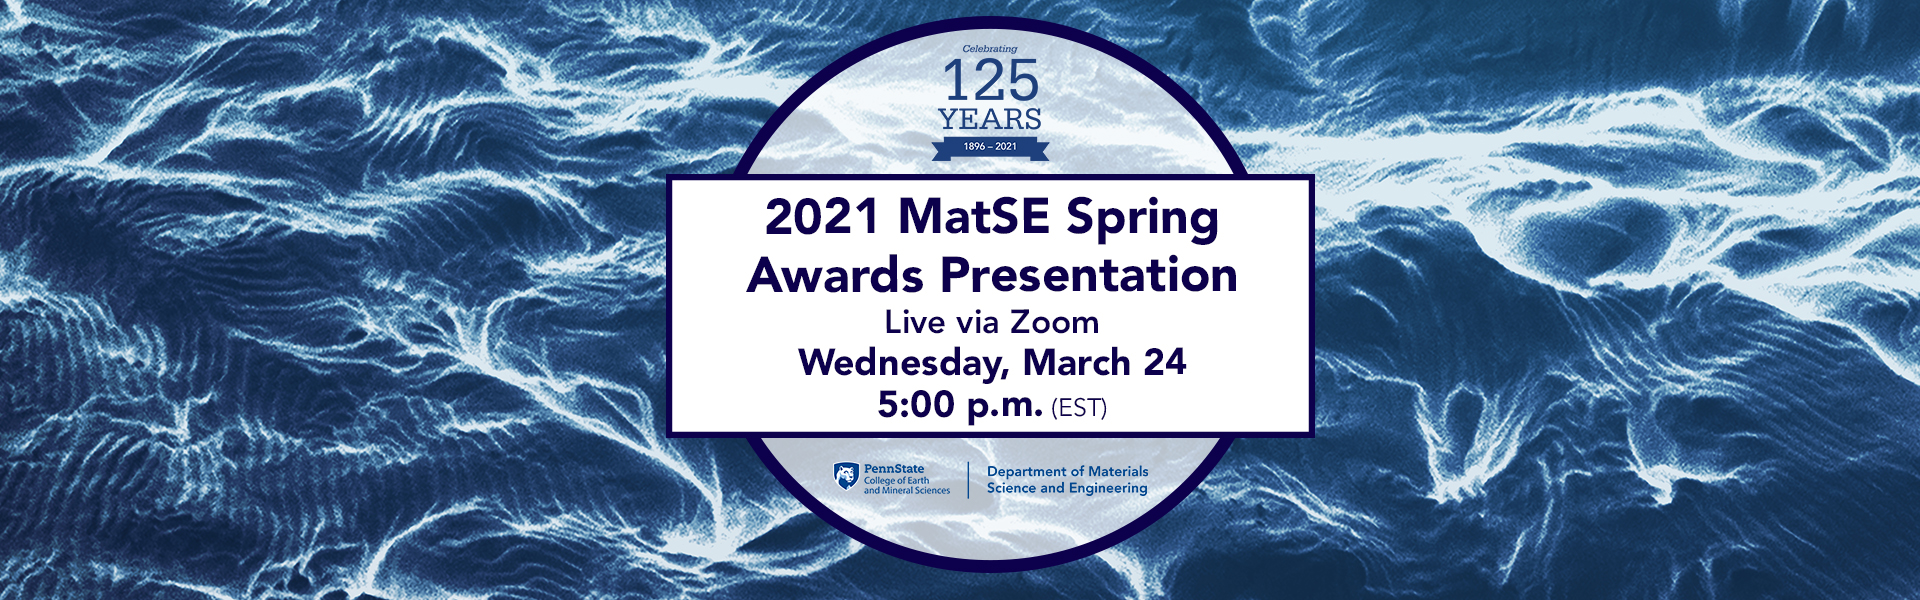 2021 MatSE Spring Awards Presentation